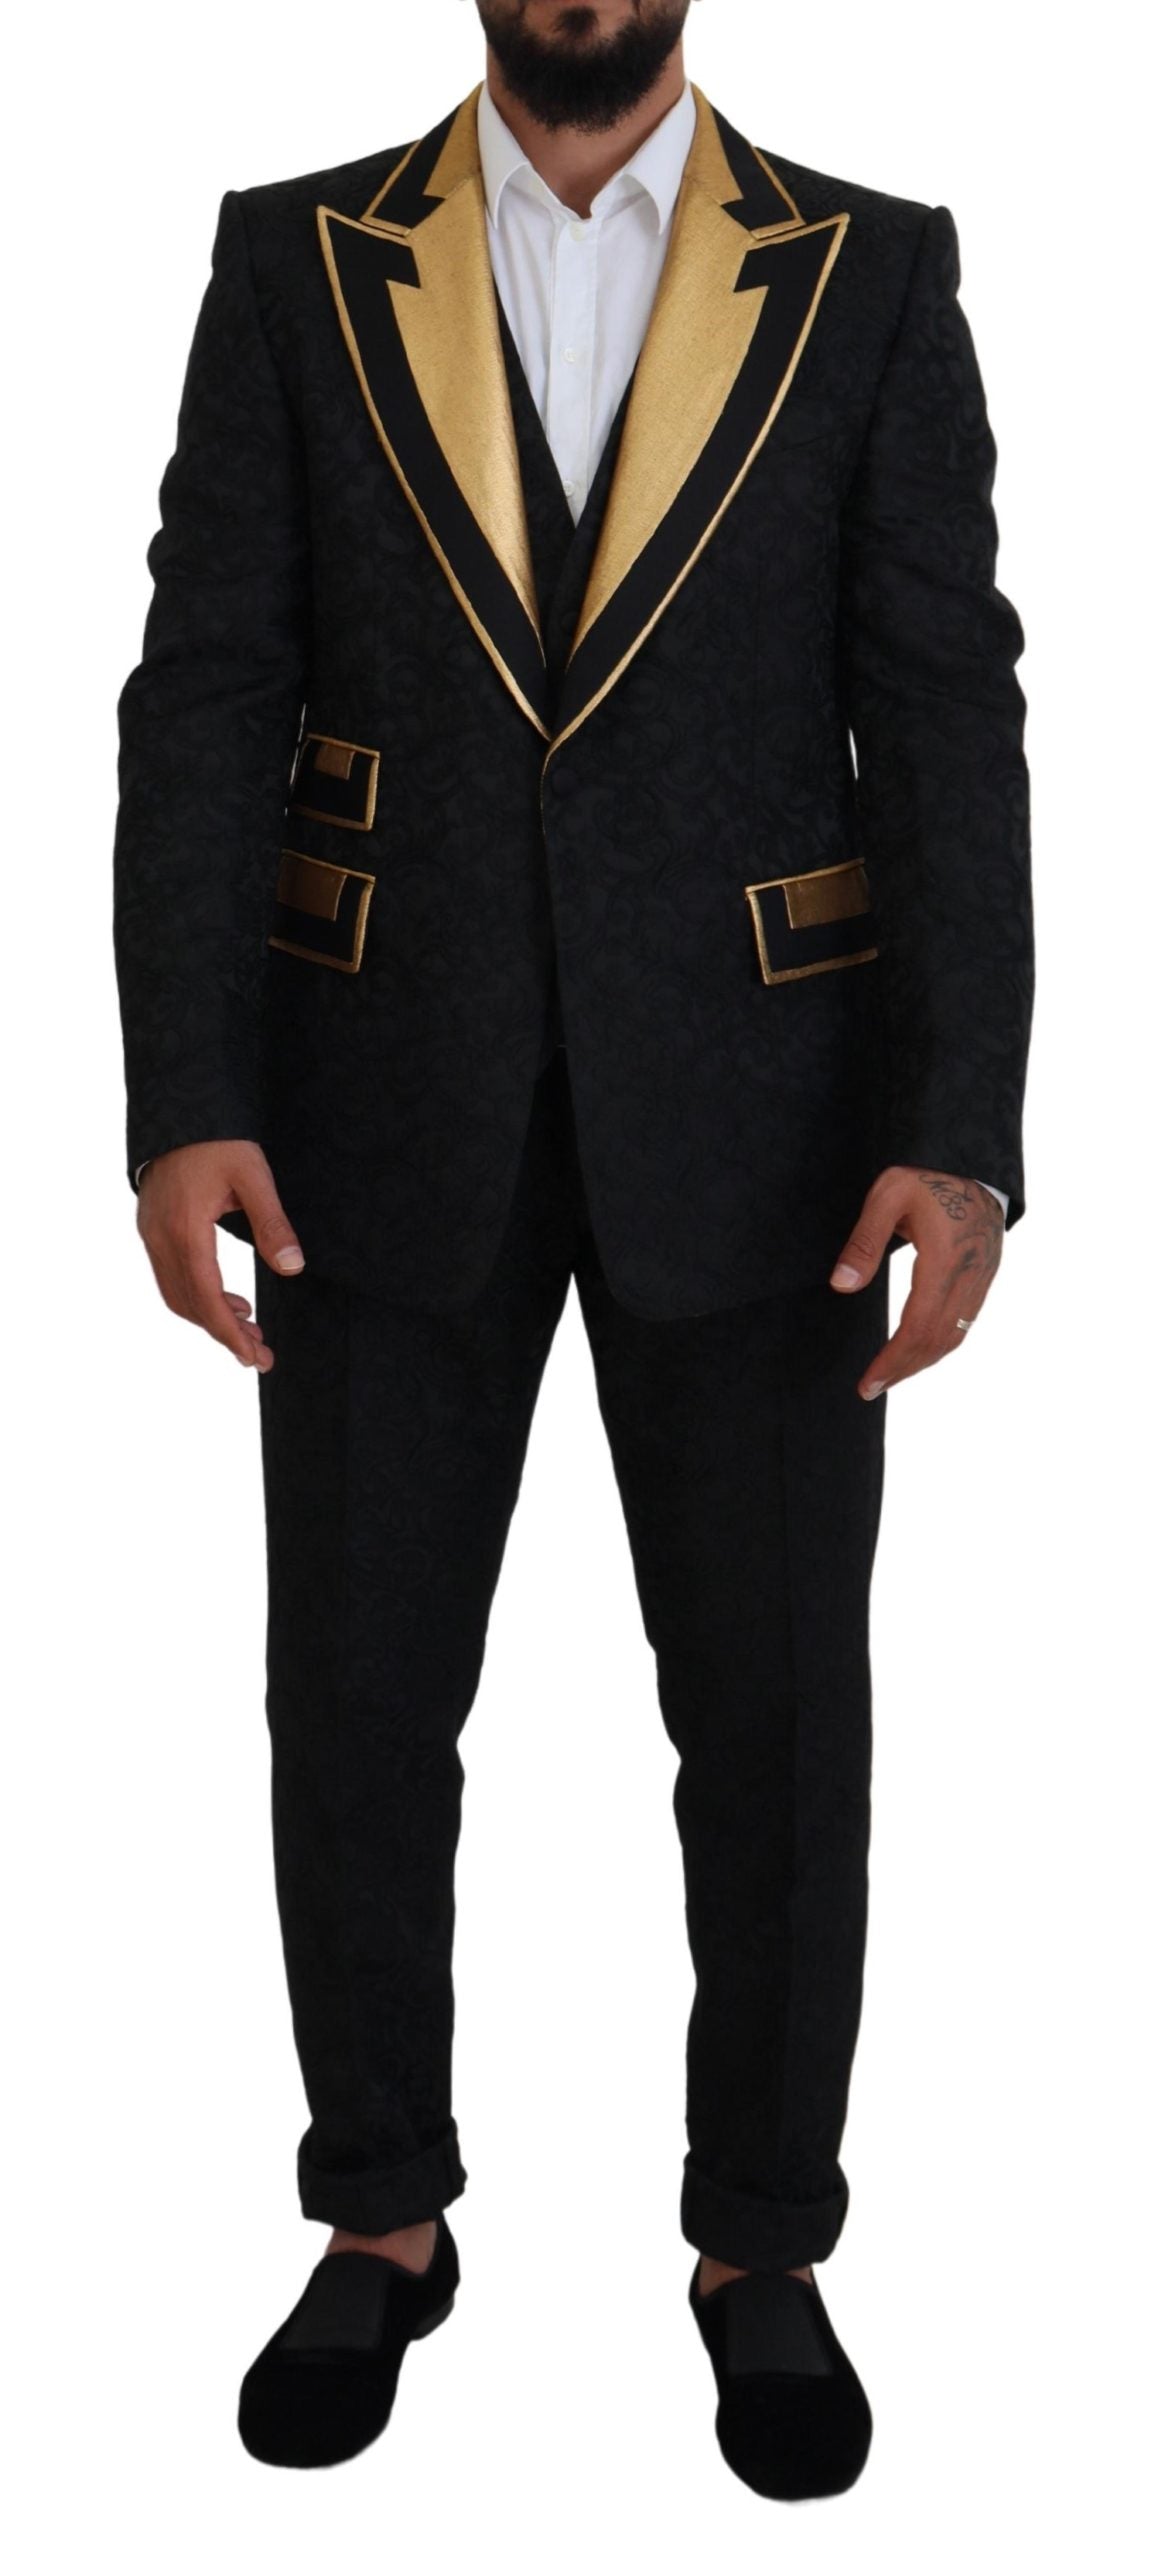 DOLCE & GABBANA Dolce & Gabbana   Fantasy Tuxedo Slim Fit Men's Suit